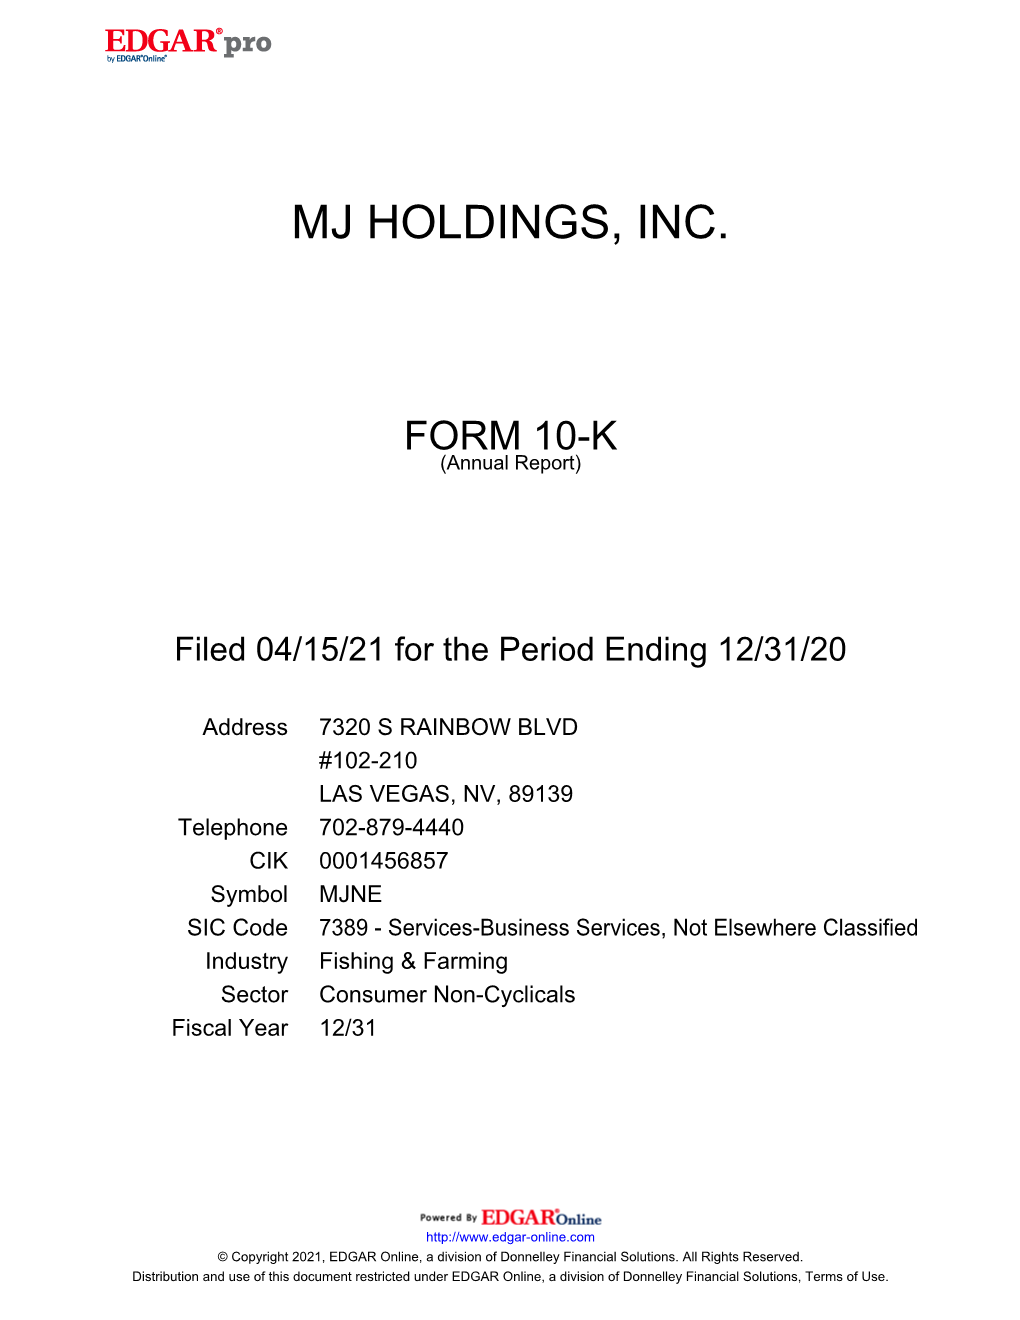 Mj Holdings, Inc